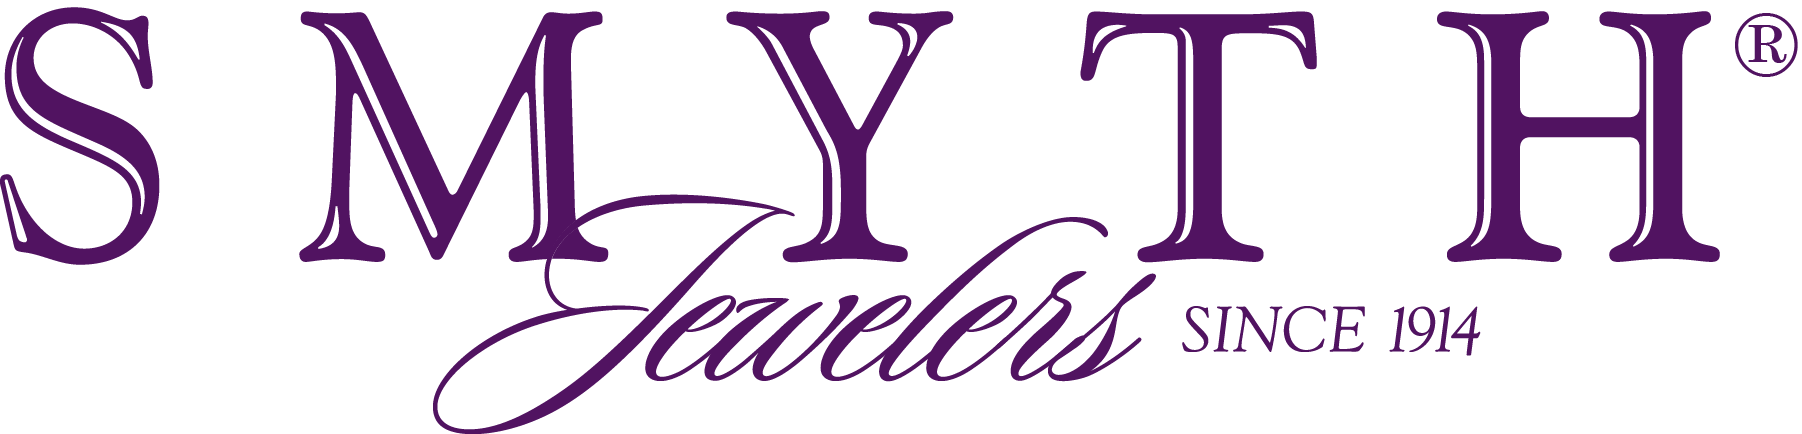 Smyth_Logo_TRADEMARK_purple